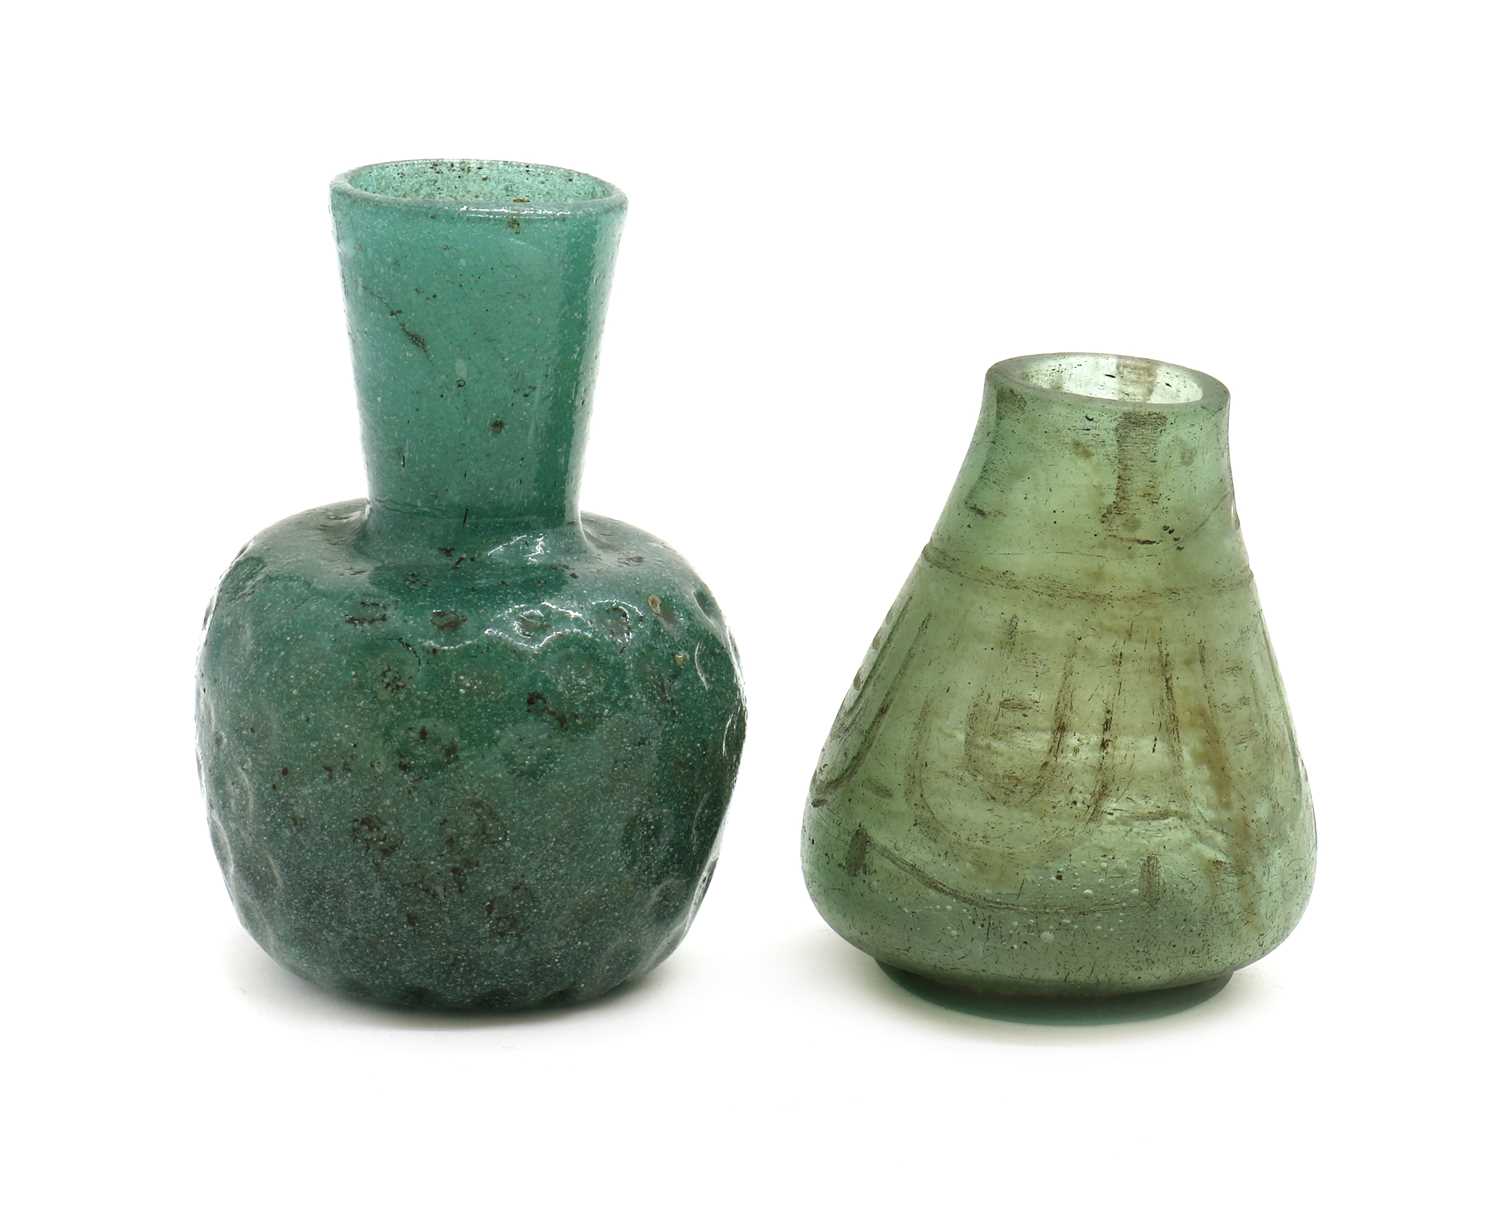 An early Islamic glass vase